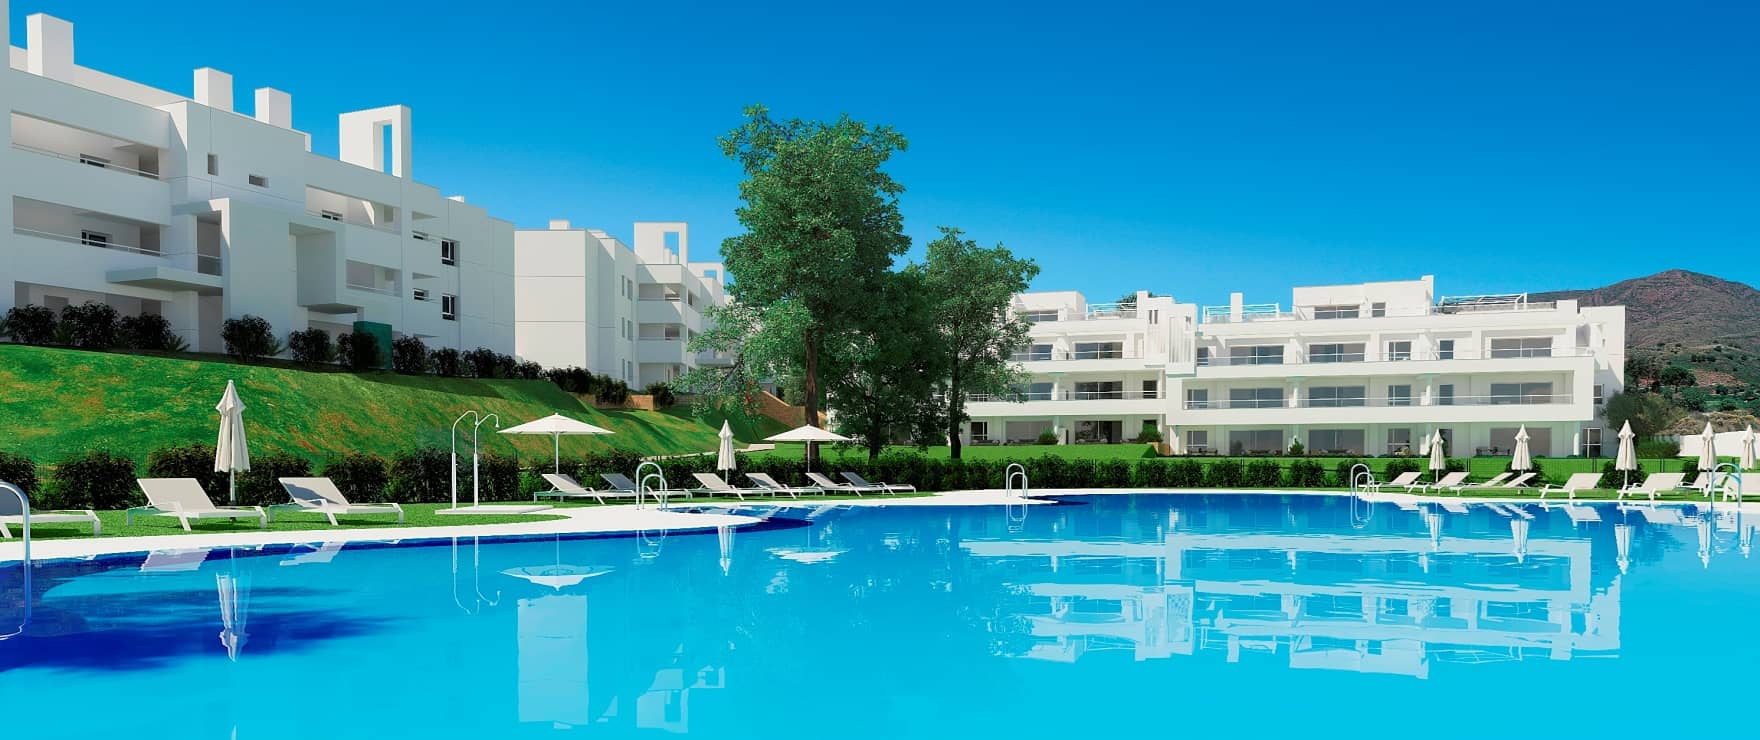 Solana Village East – La Cala Golf Resort, Mijas (Malaga)